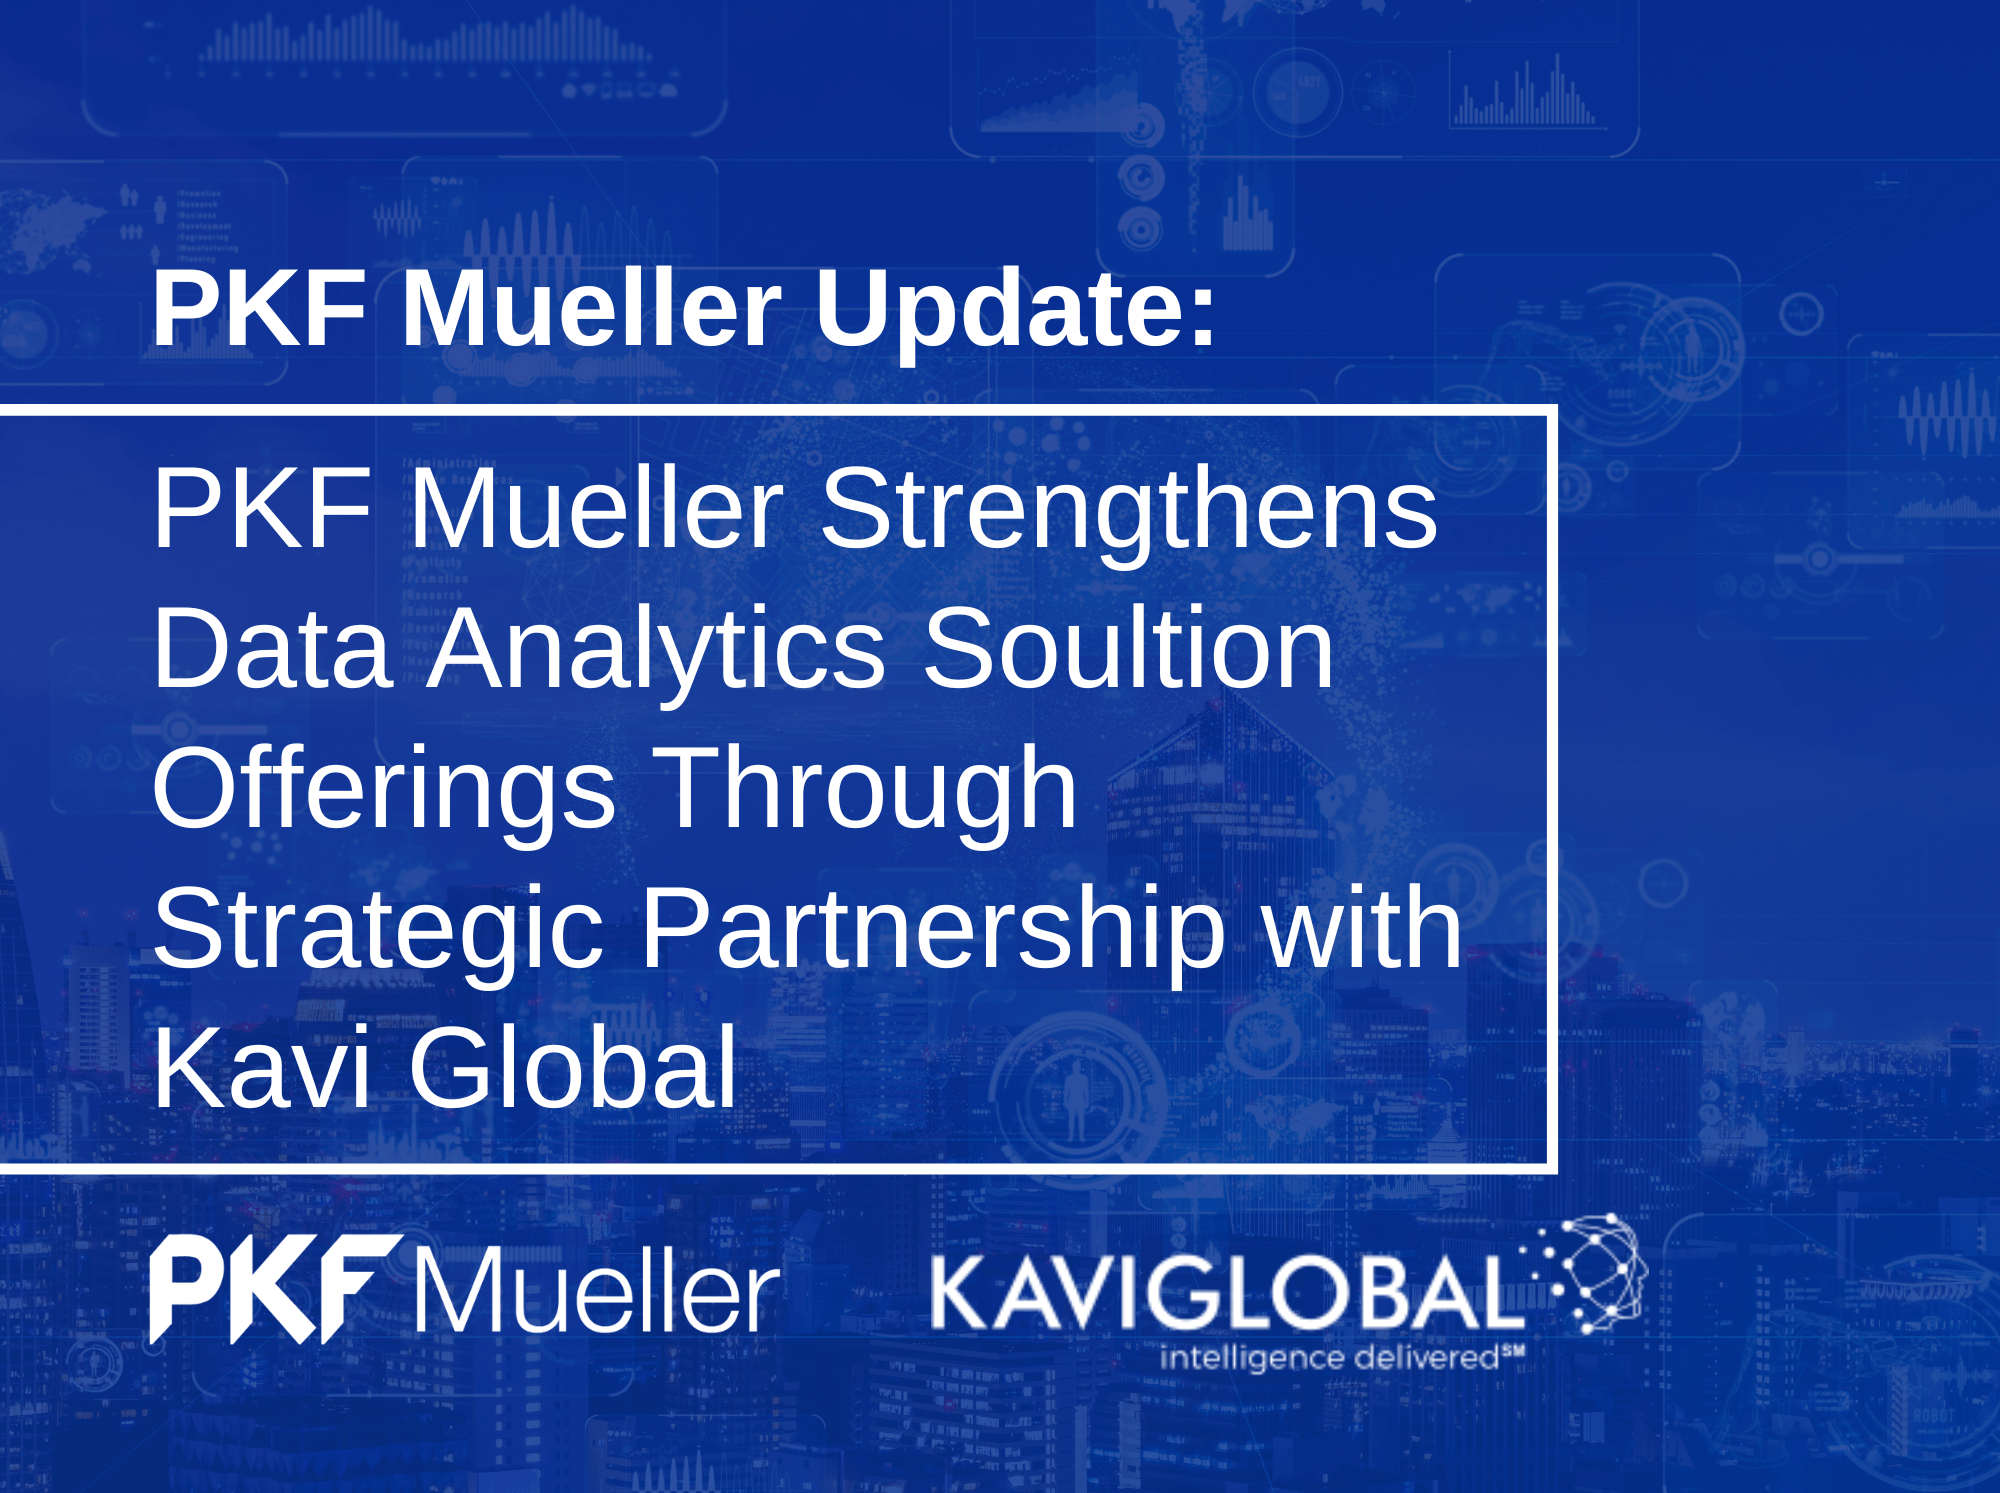 PKF Mueller Partners with Kavi Global, a data analytics company.